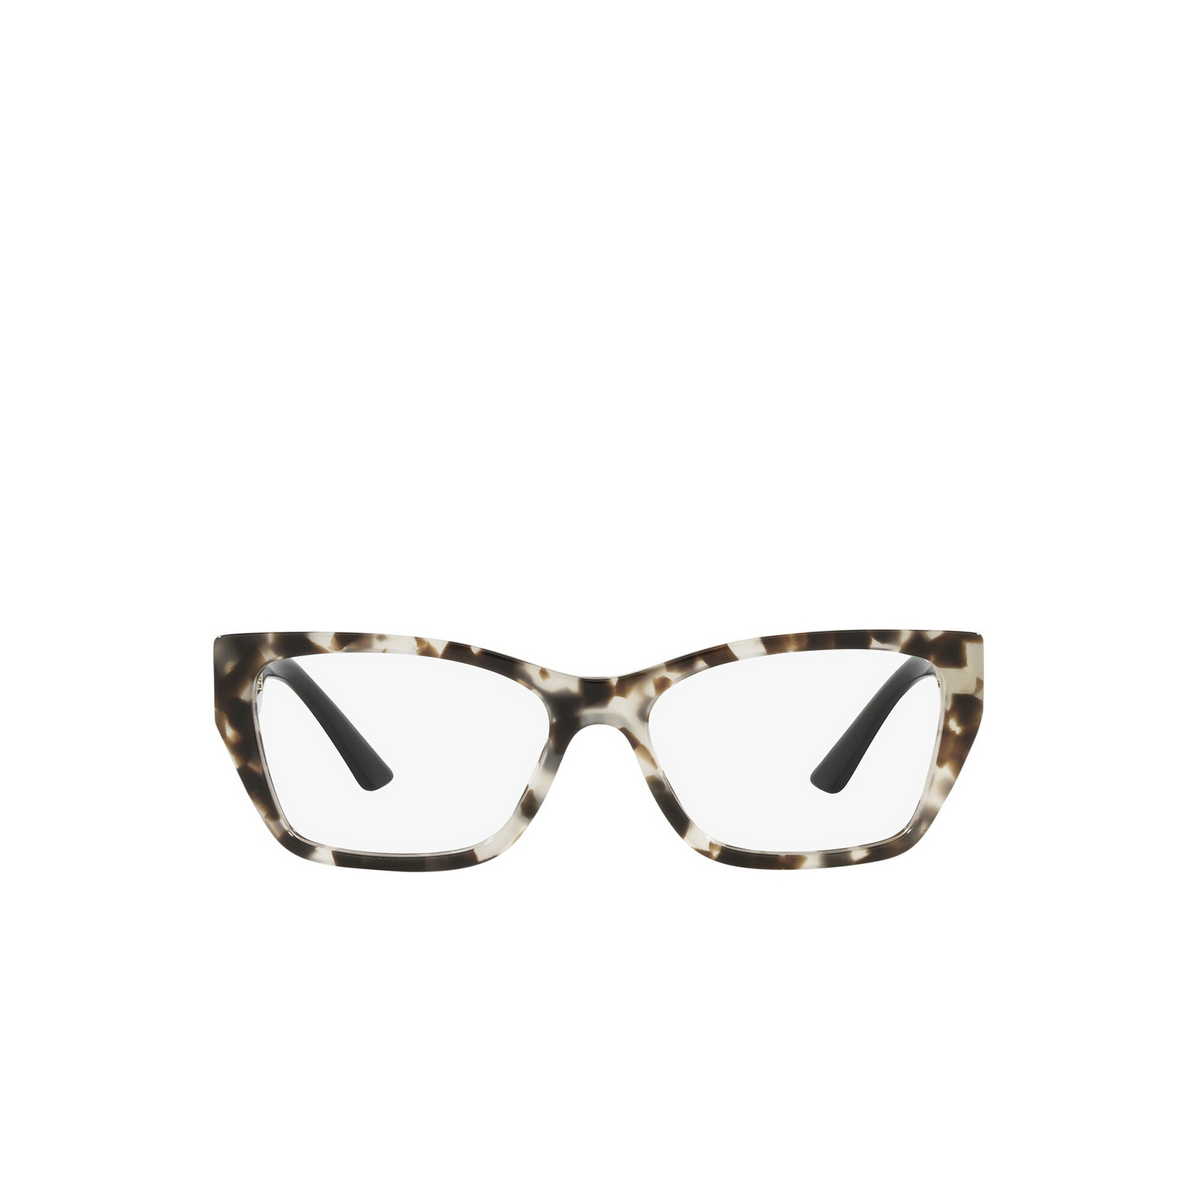 Prada® Square Eyeglasses: PR 11YV color Talc Tortoise UAO1O1 - front view.